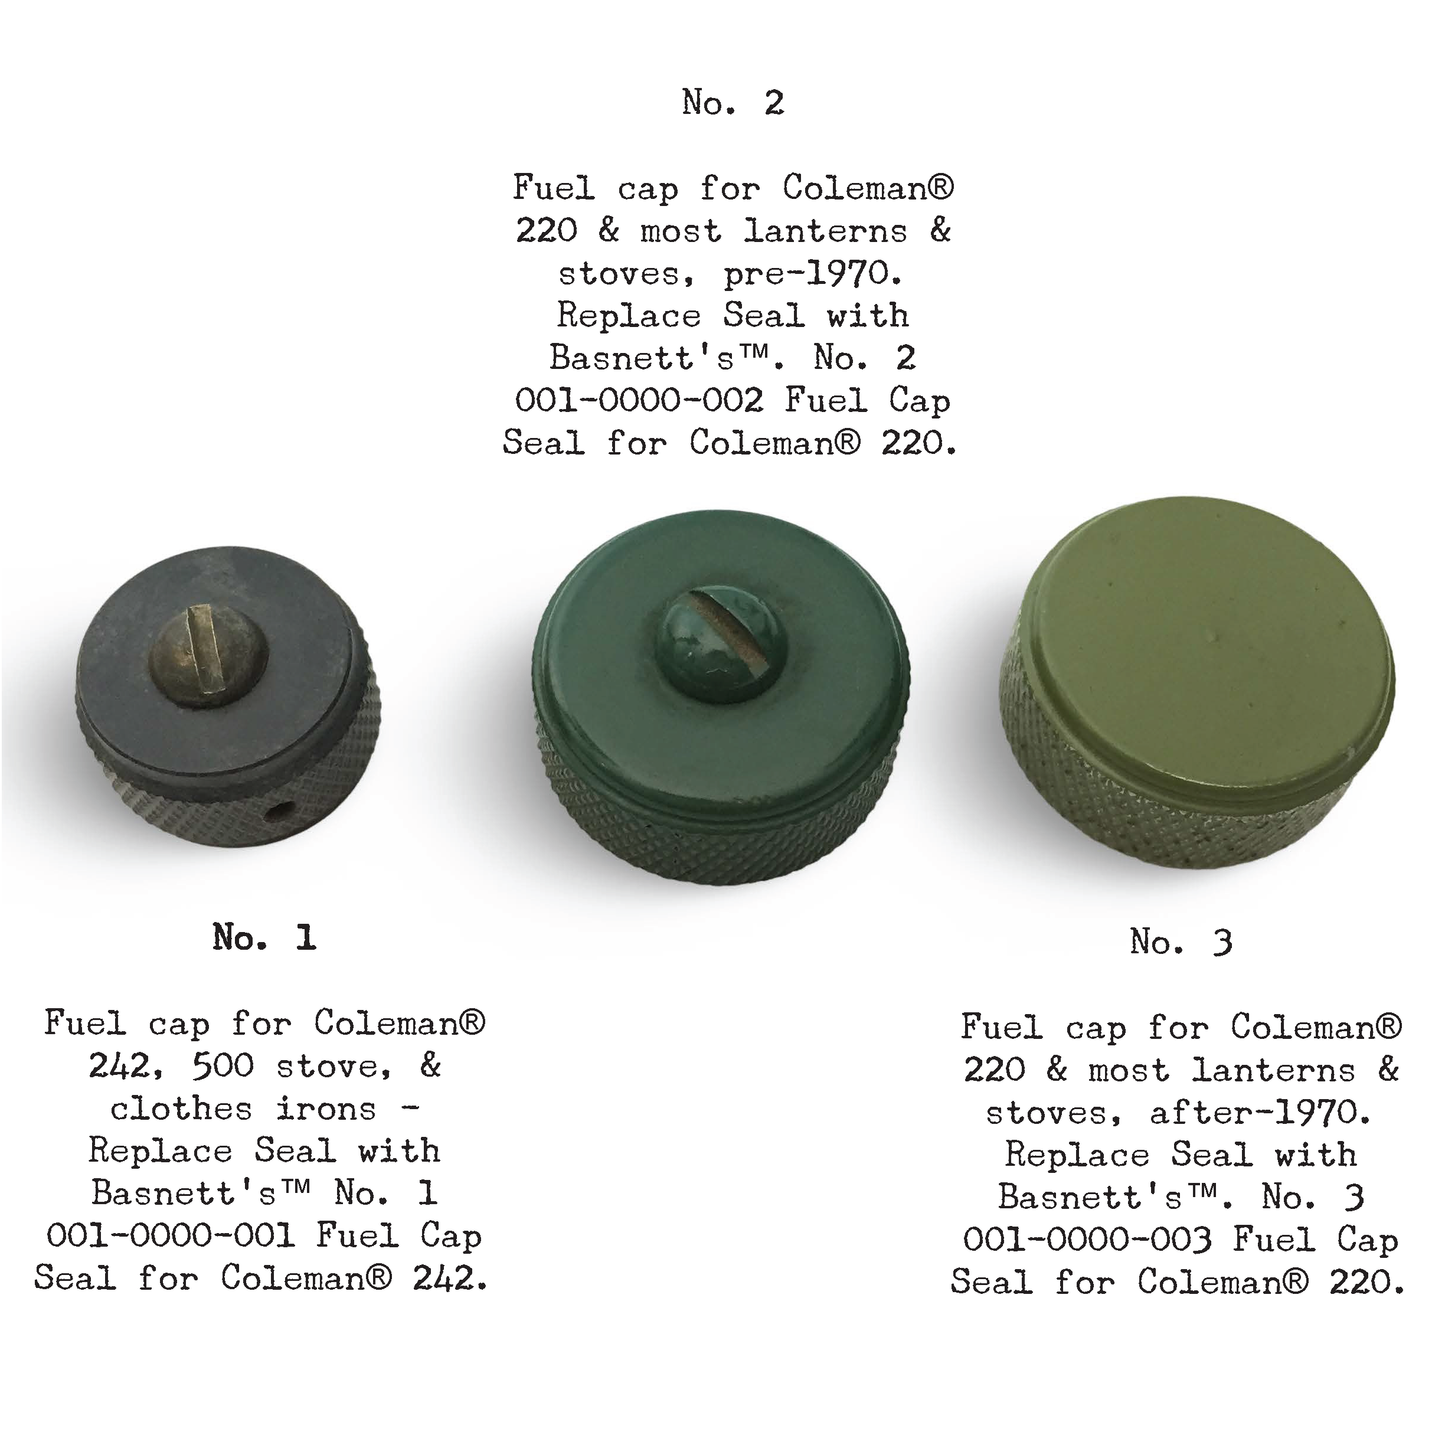 No. 2 Fuel Cap Seals for Coleman® Lanterns and Stoves (Pre-1970)